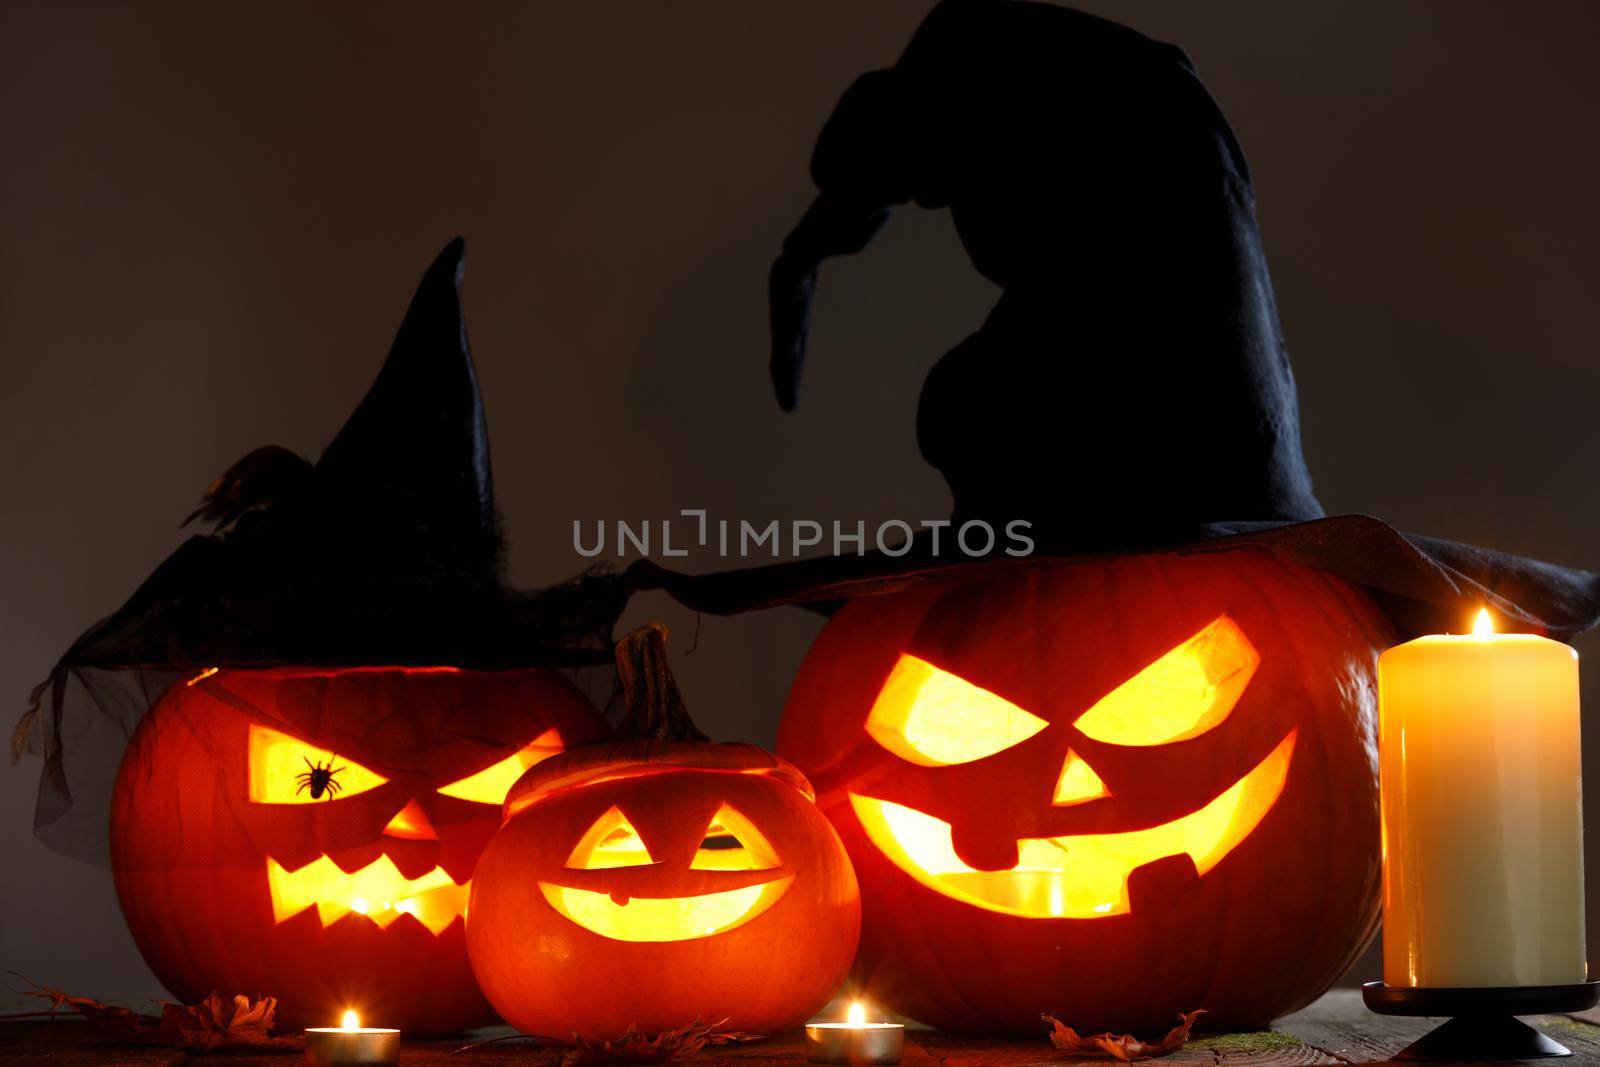 Halloween pumpkin lanterns by Yellowj